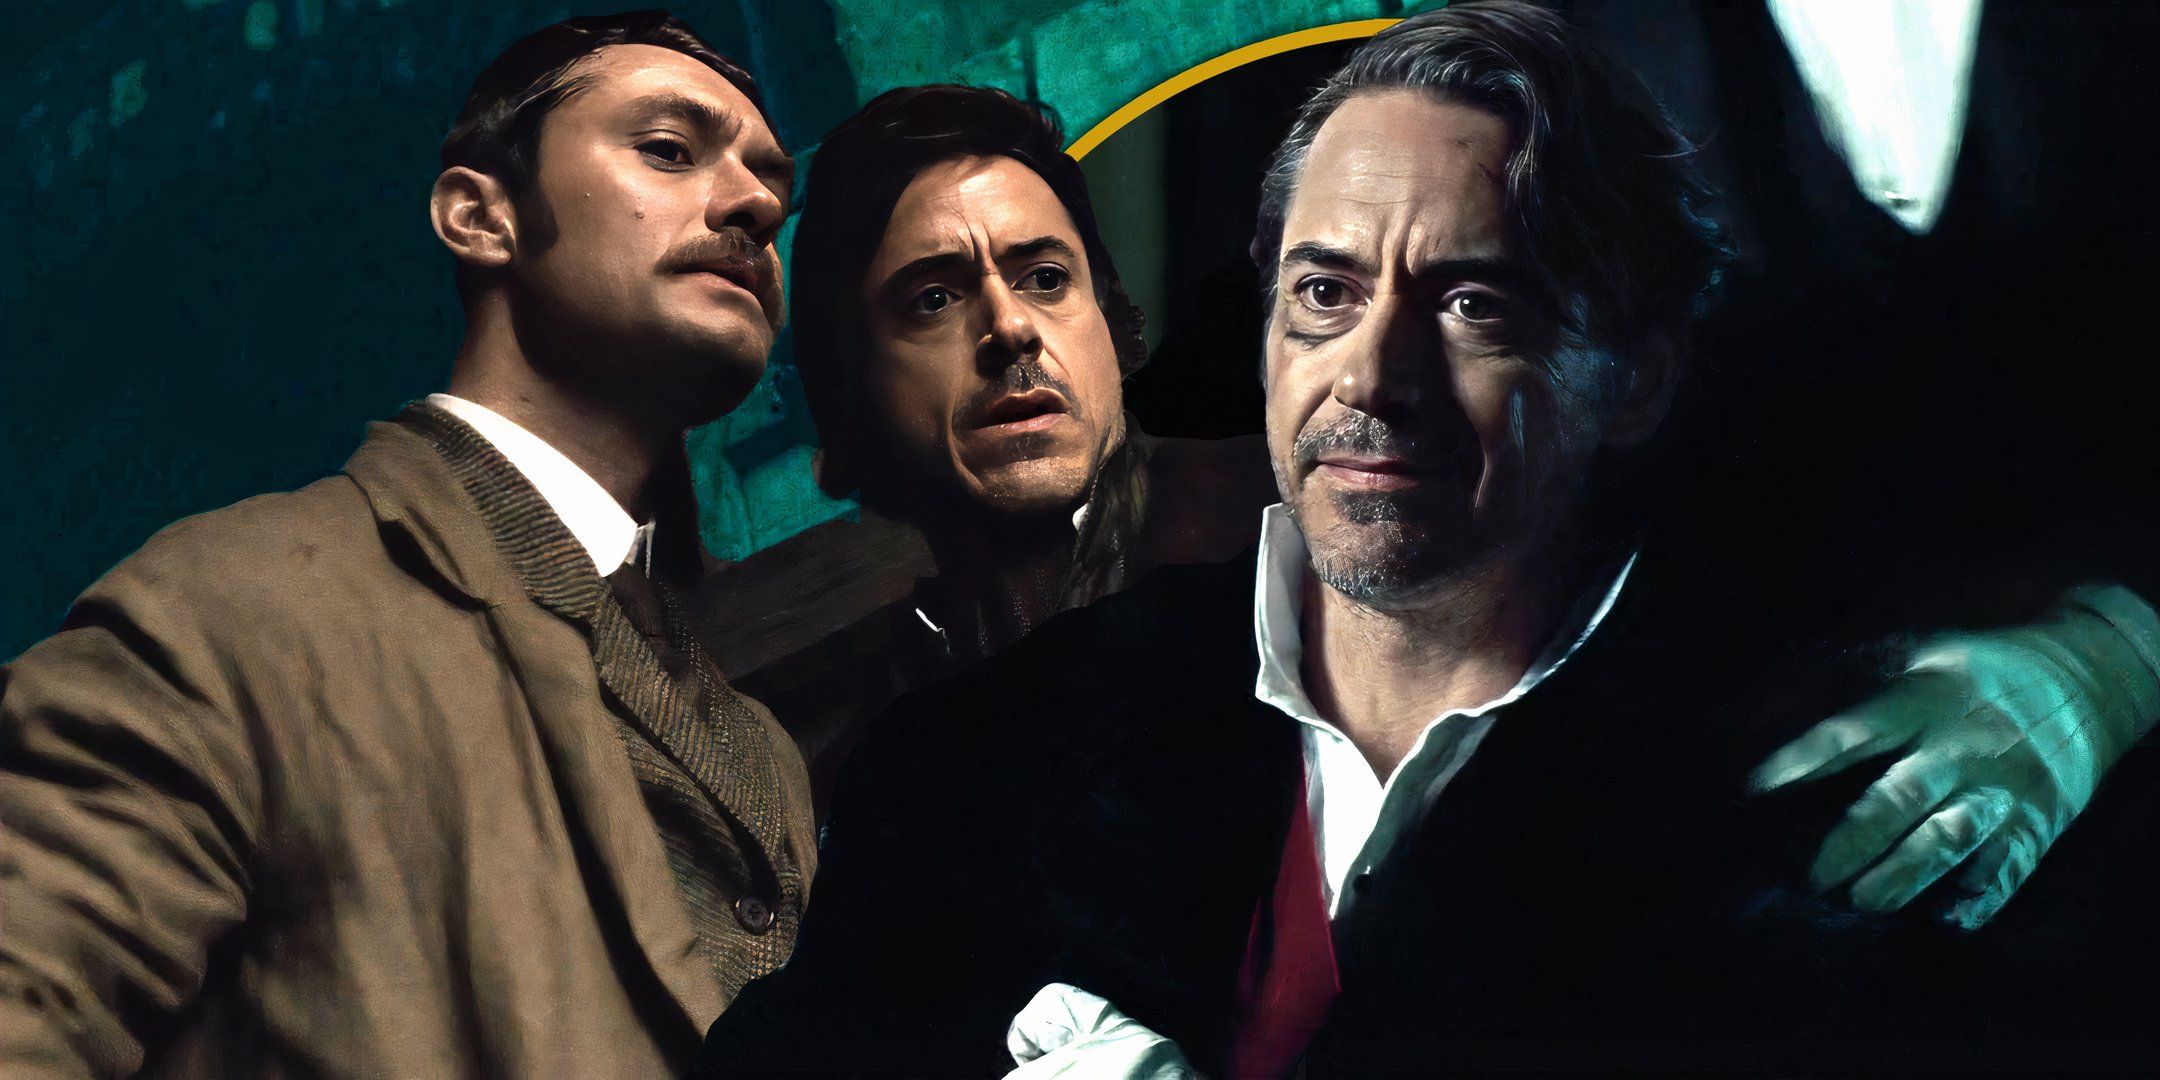 Robert Downey Jr. as Sherlock smiling at himself and Jude Law's Watson in Sherlock Holmes Exclusive header